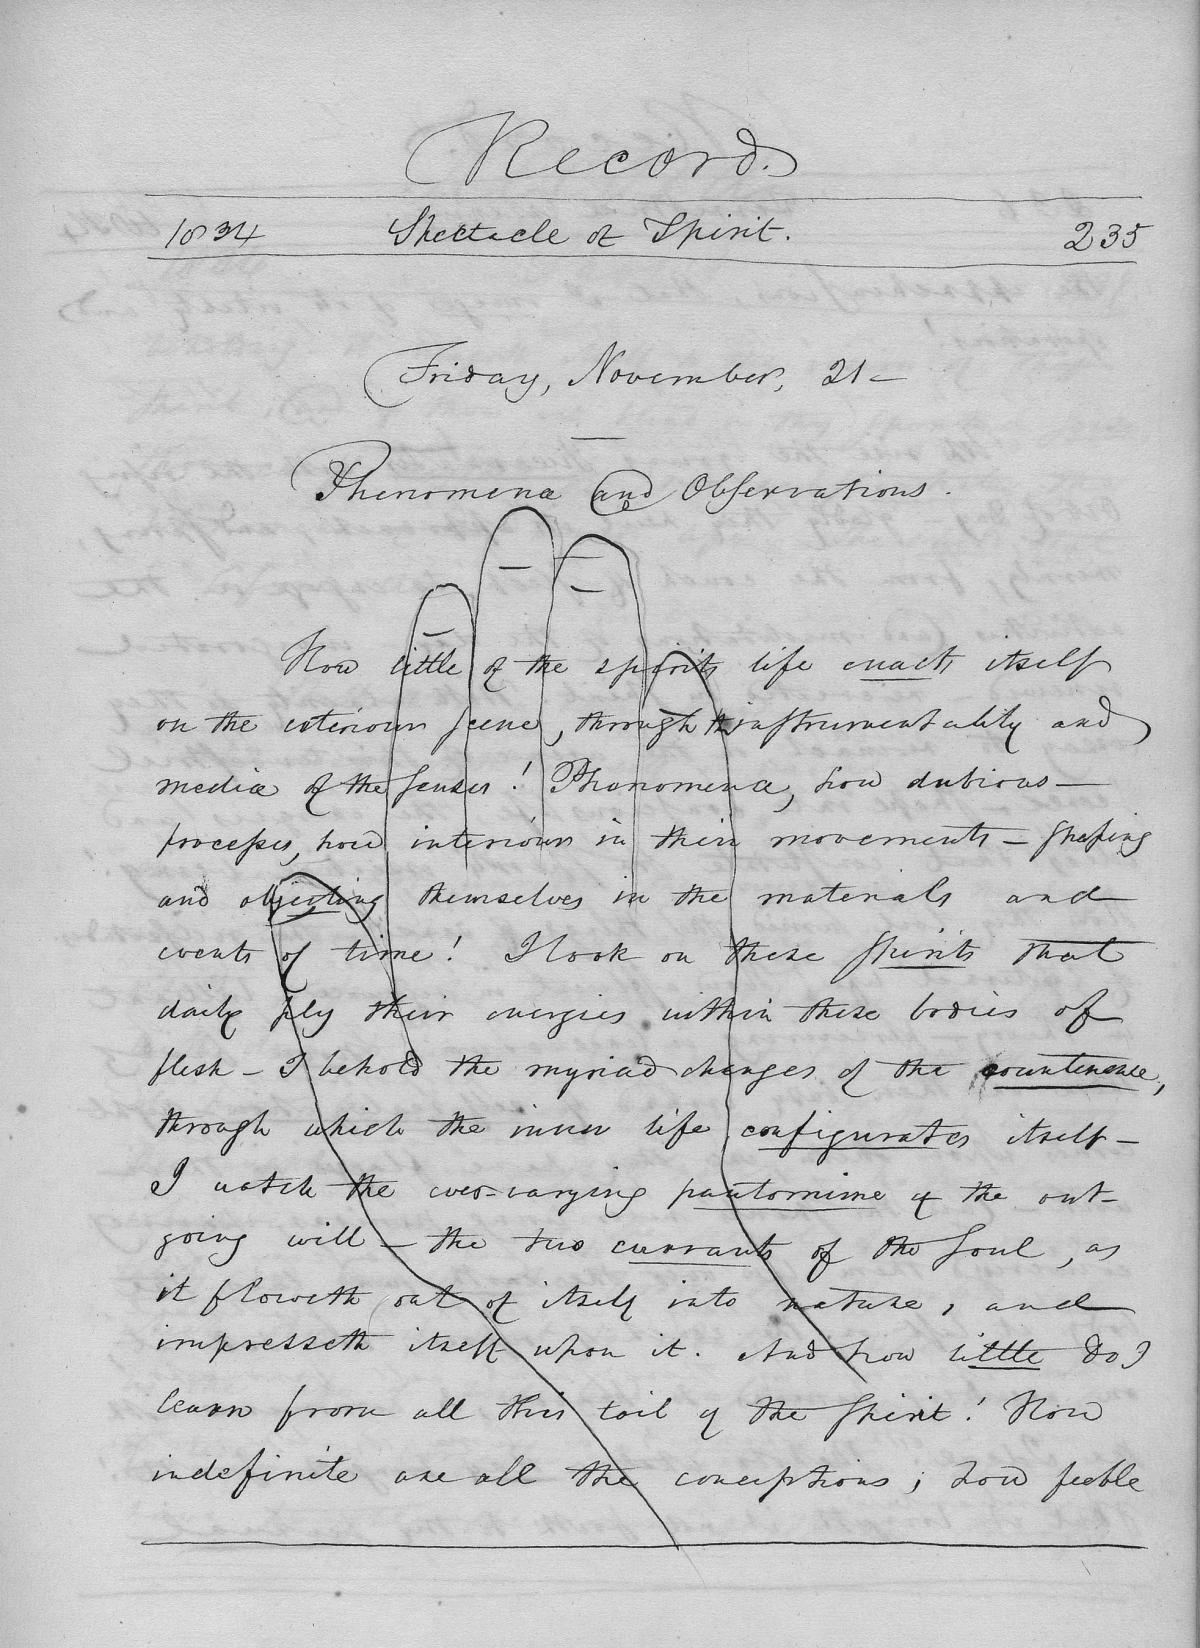 A blobbily outlined hand, over a handwritten journal entry